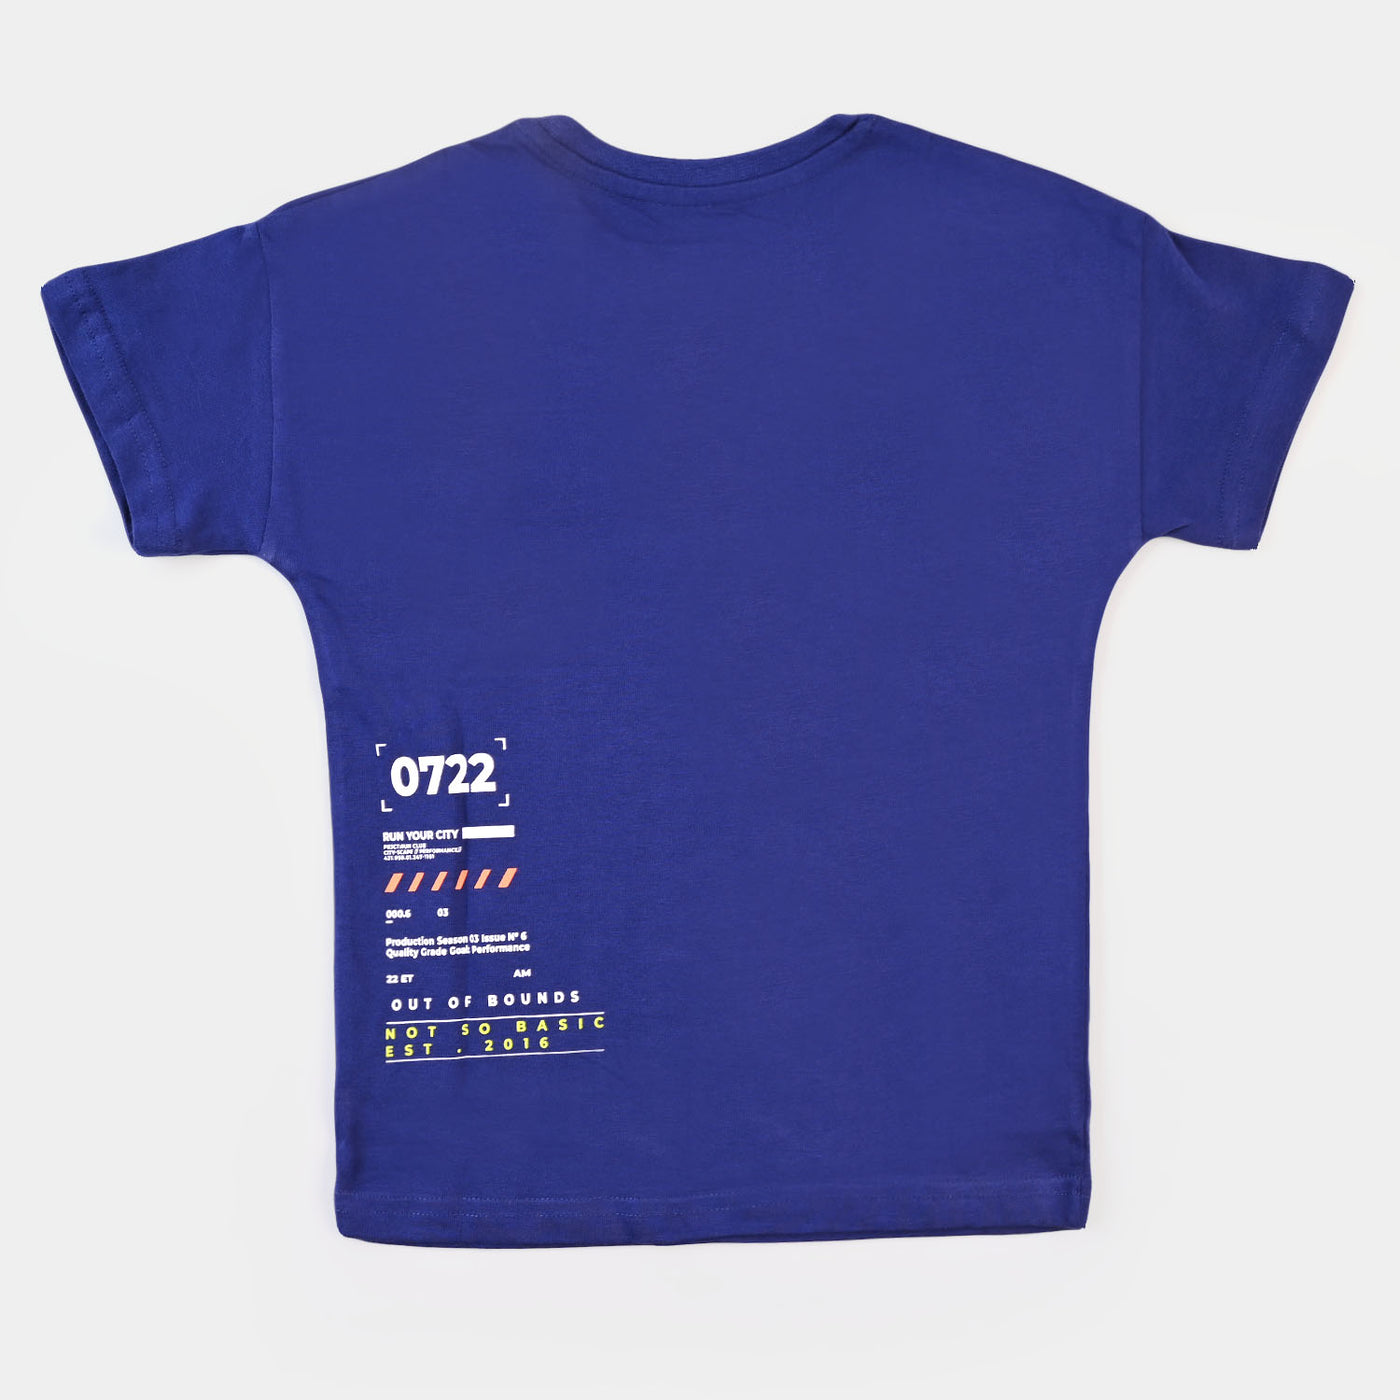 Boys Cotton T-Shirt Limited - Navy Blue